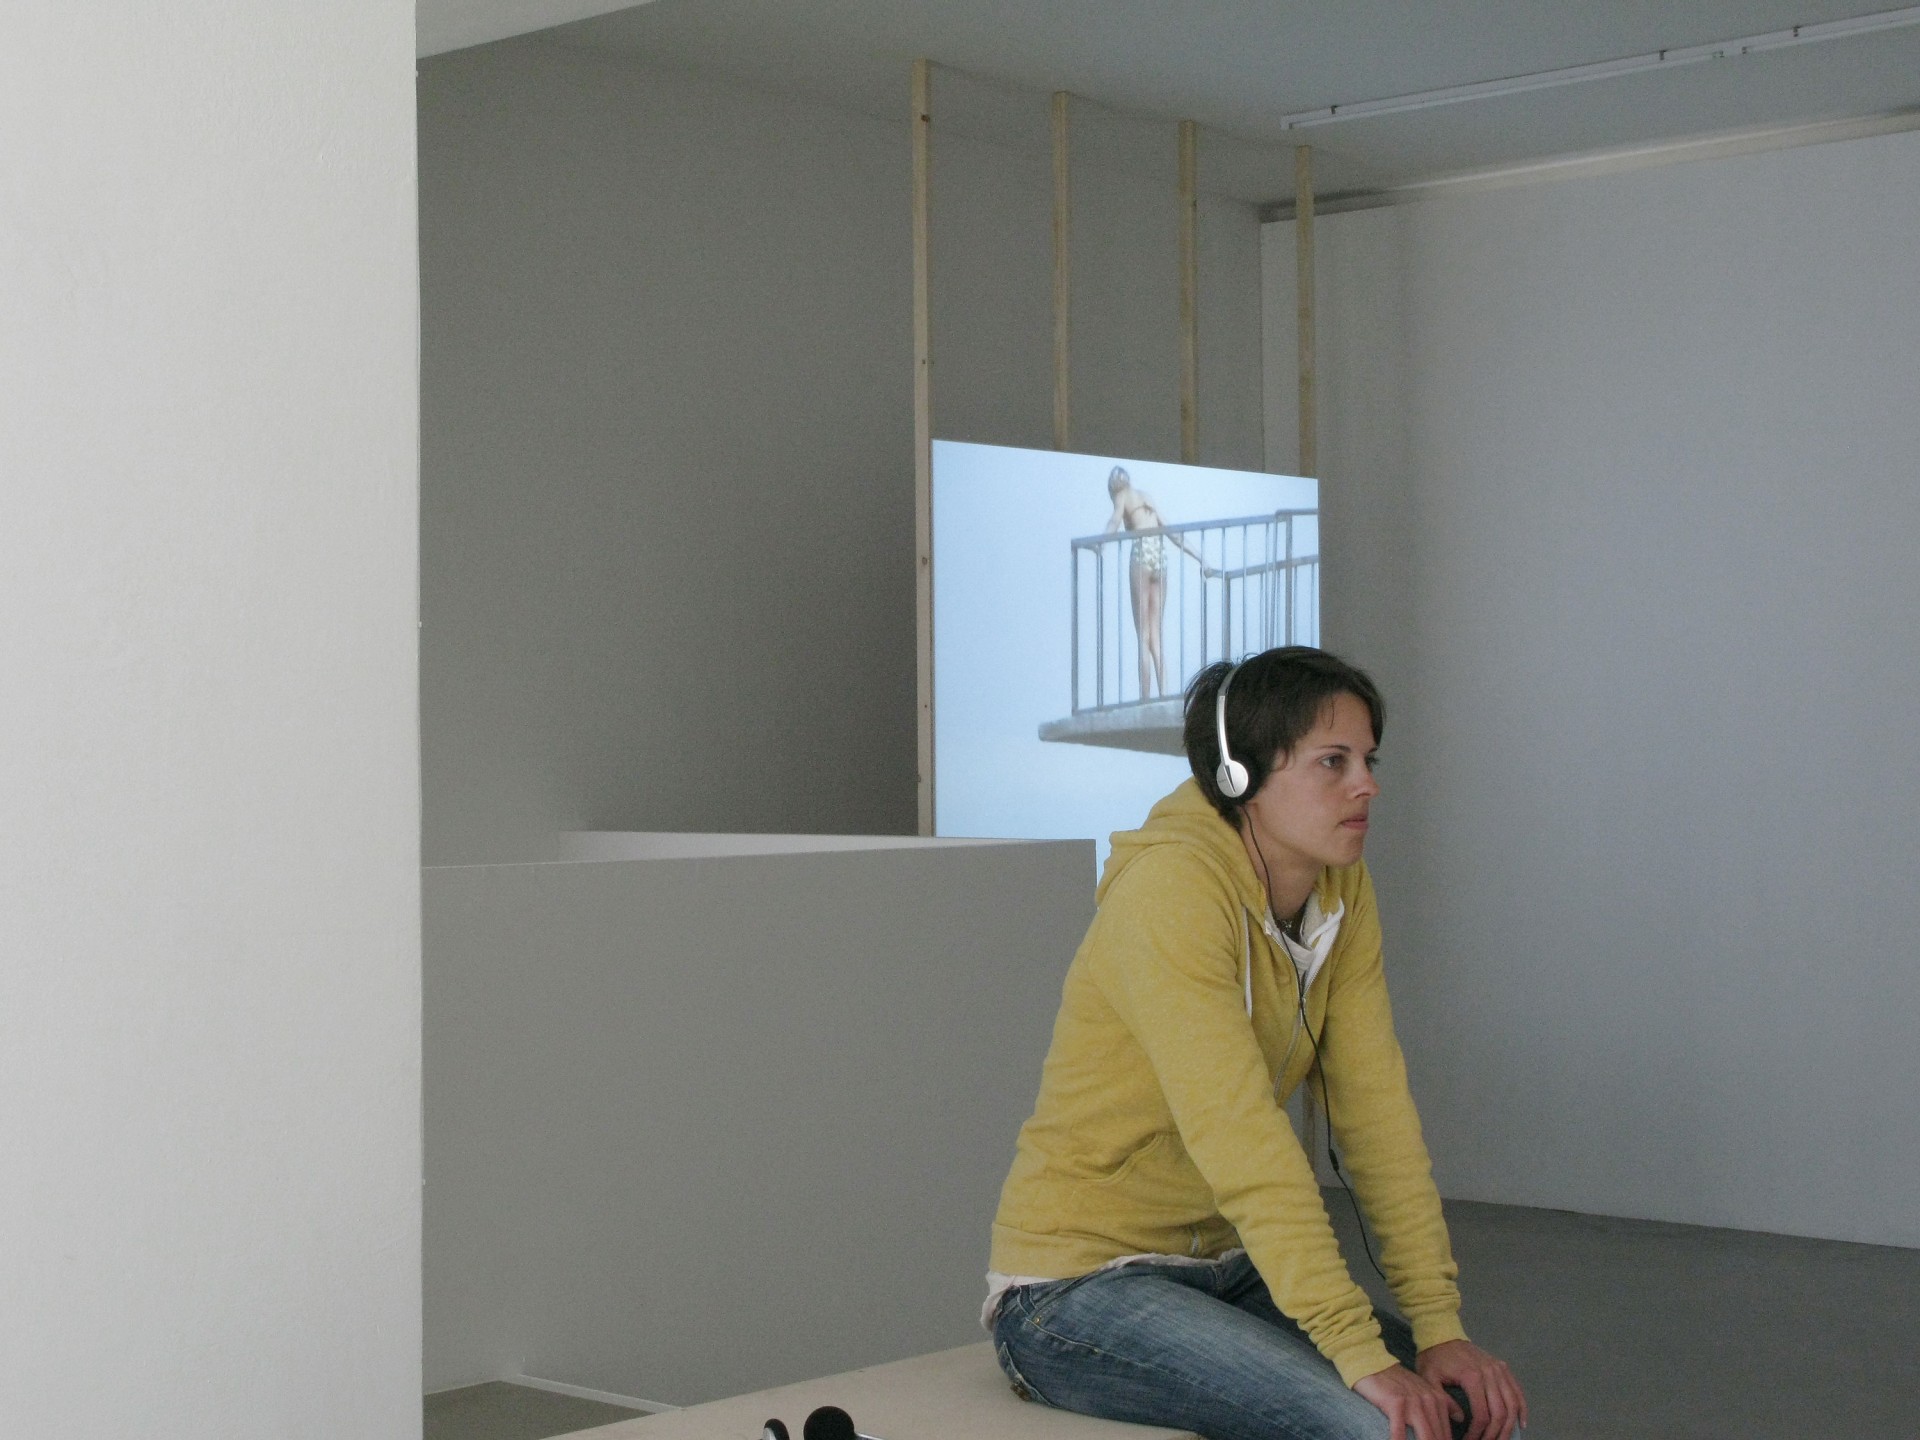 Johanna Billing Moving In, Five films — Grazer Kunstverein, Graz, 2010